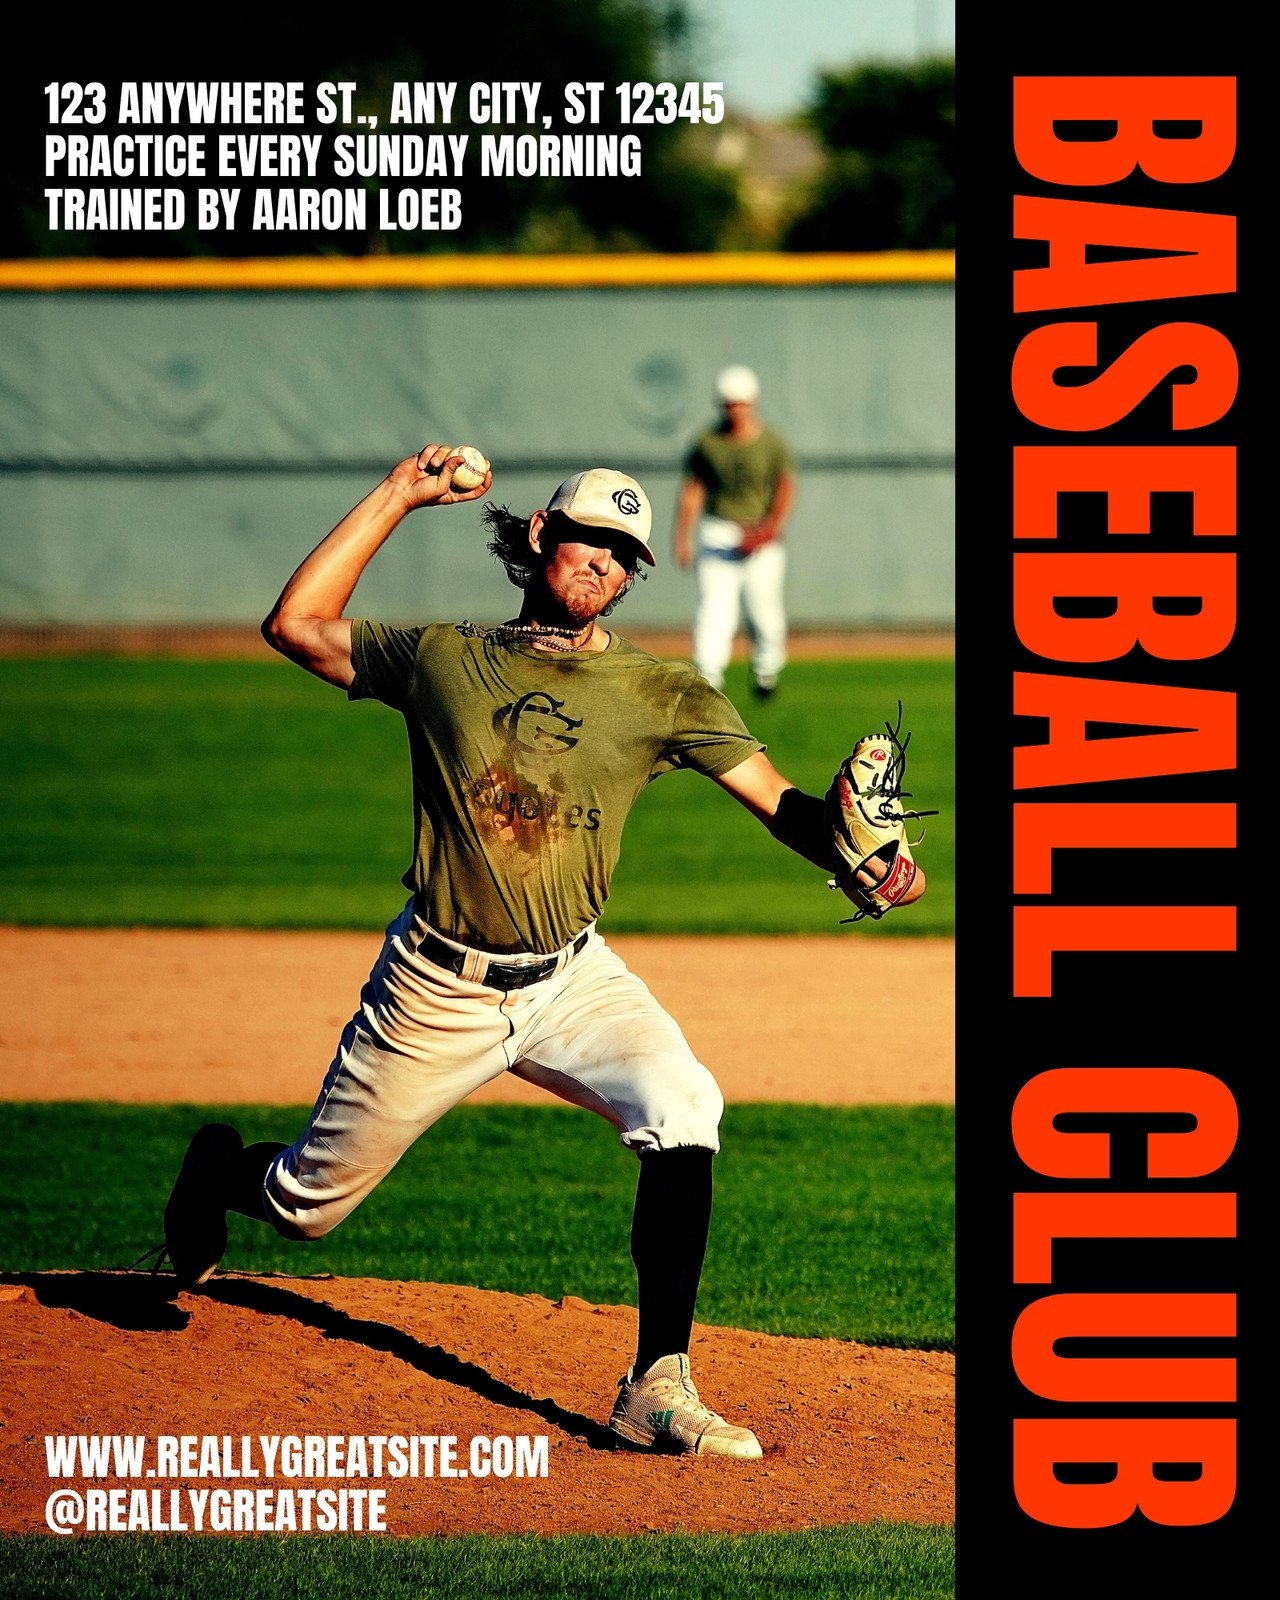 The Baseball Poster